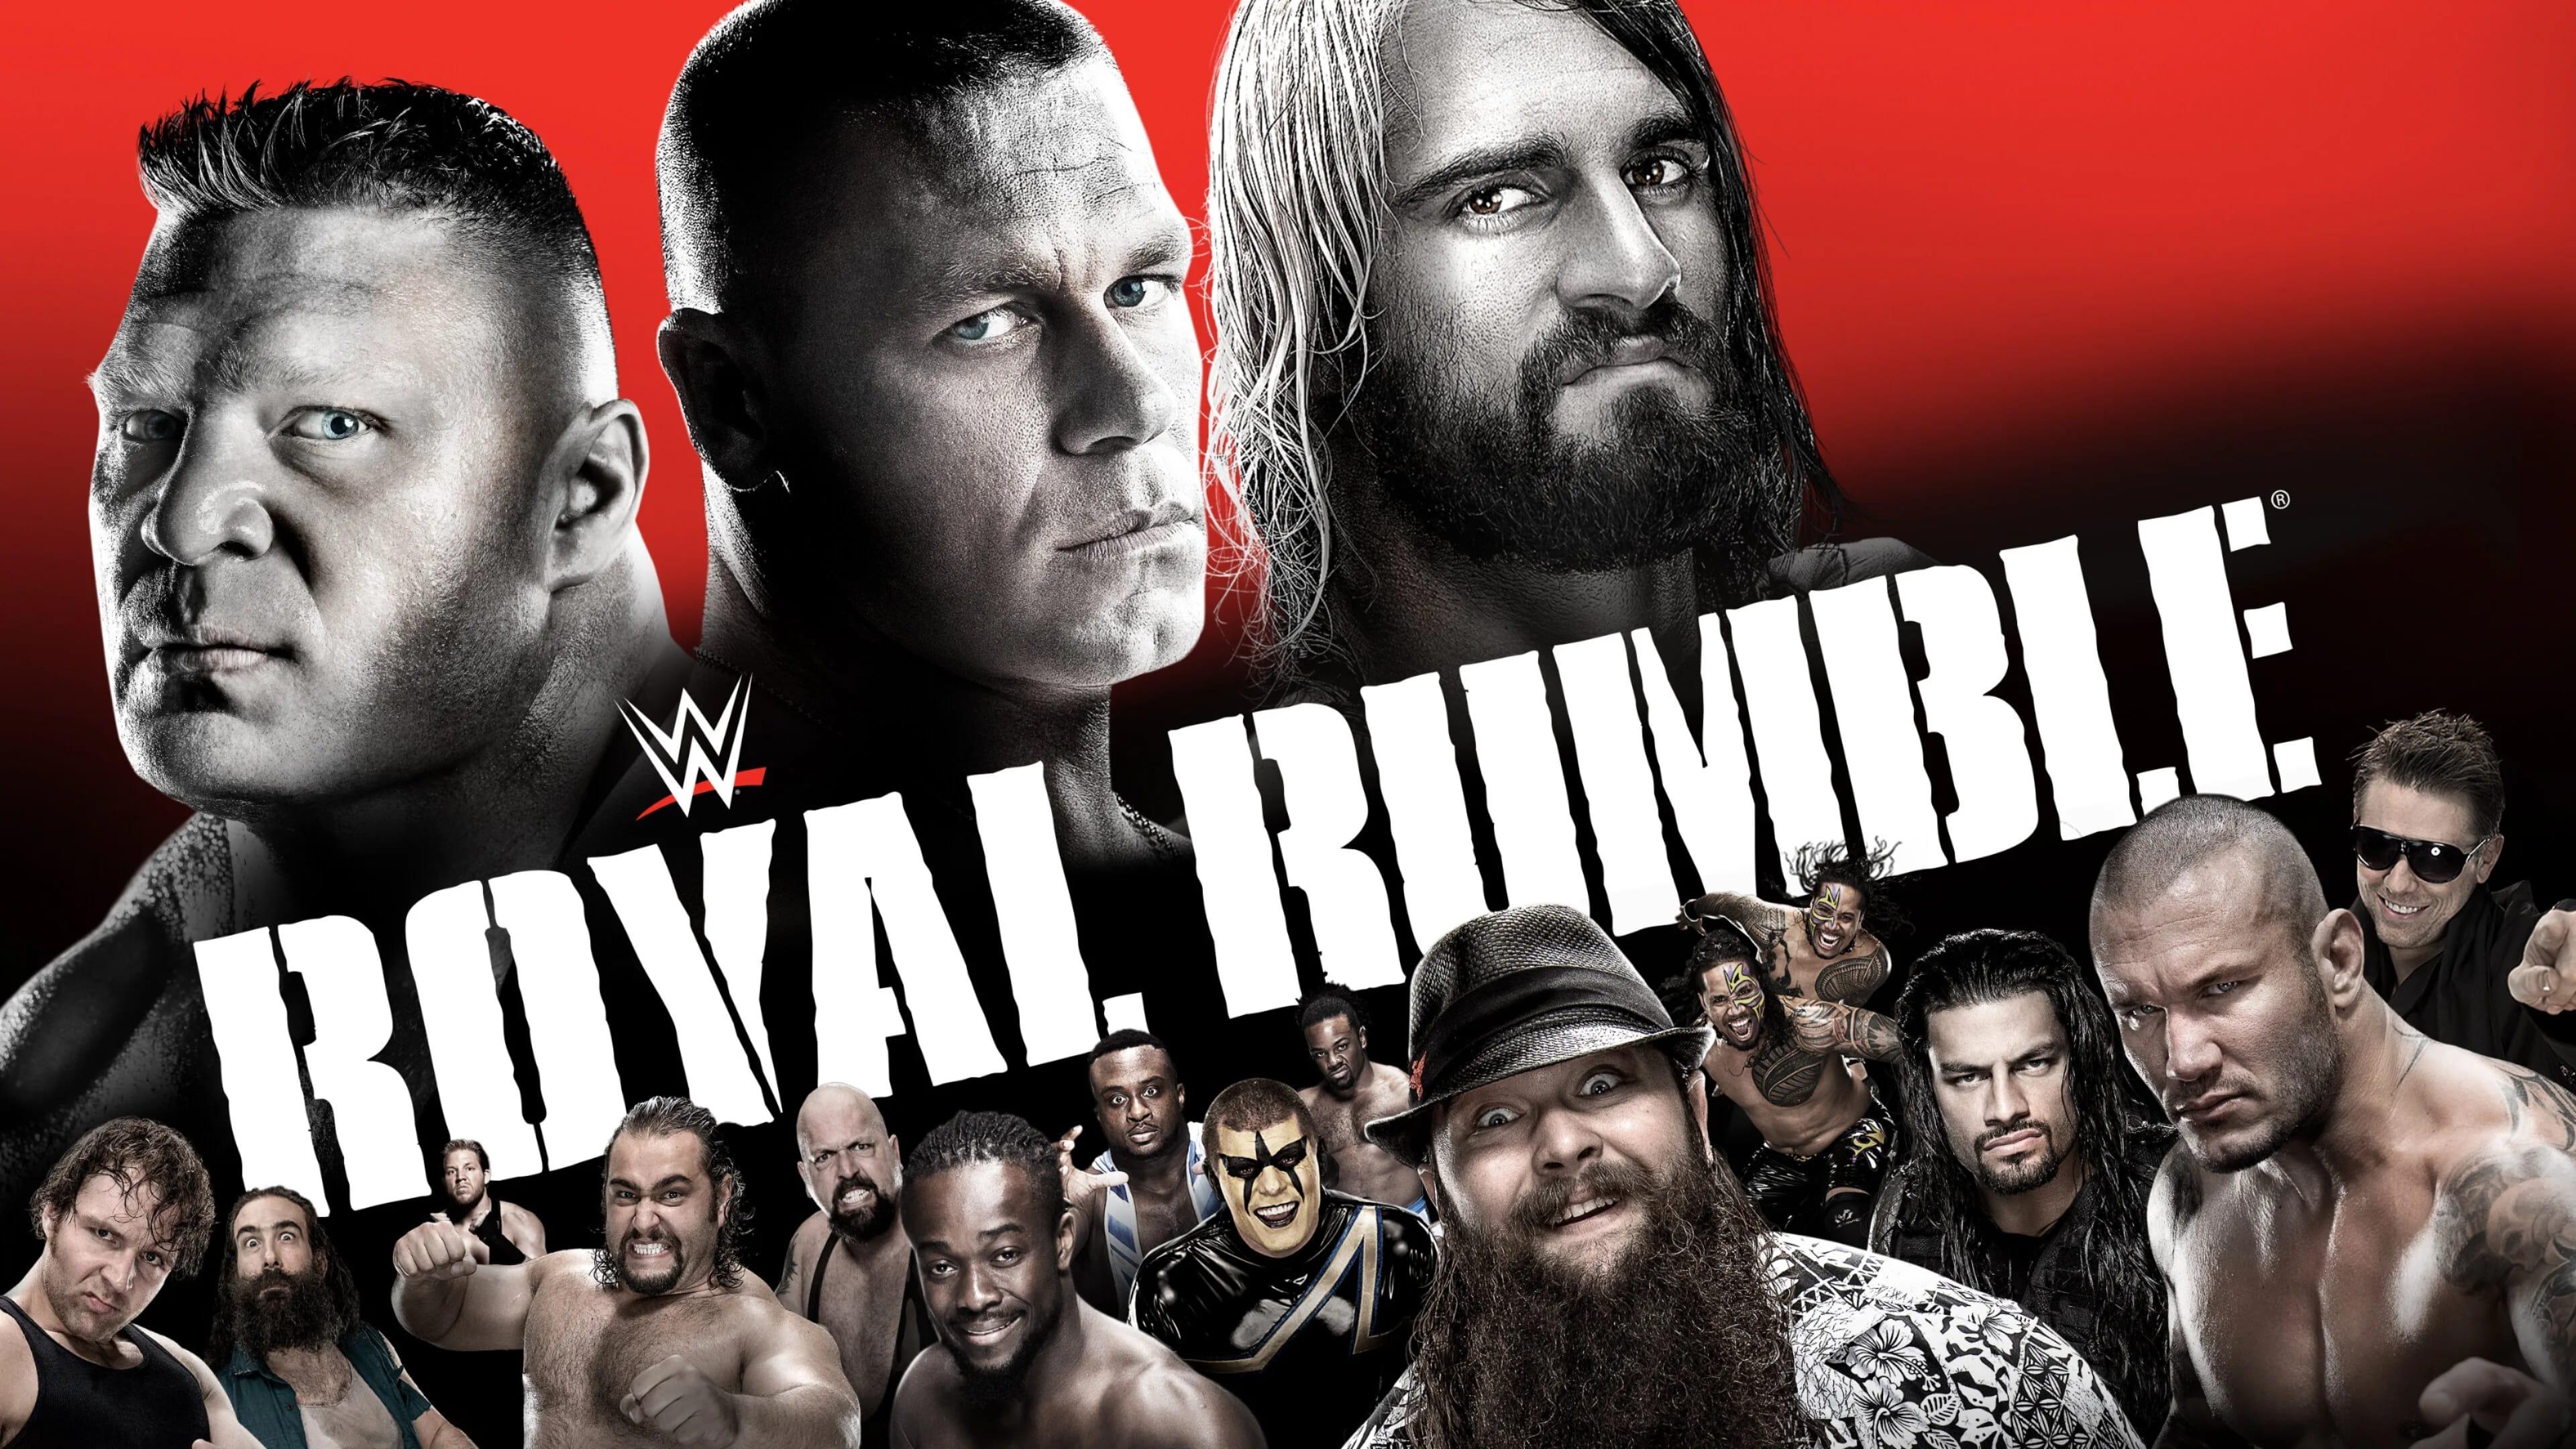 WWE Royal Rumble 2015 backdrop